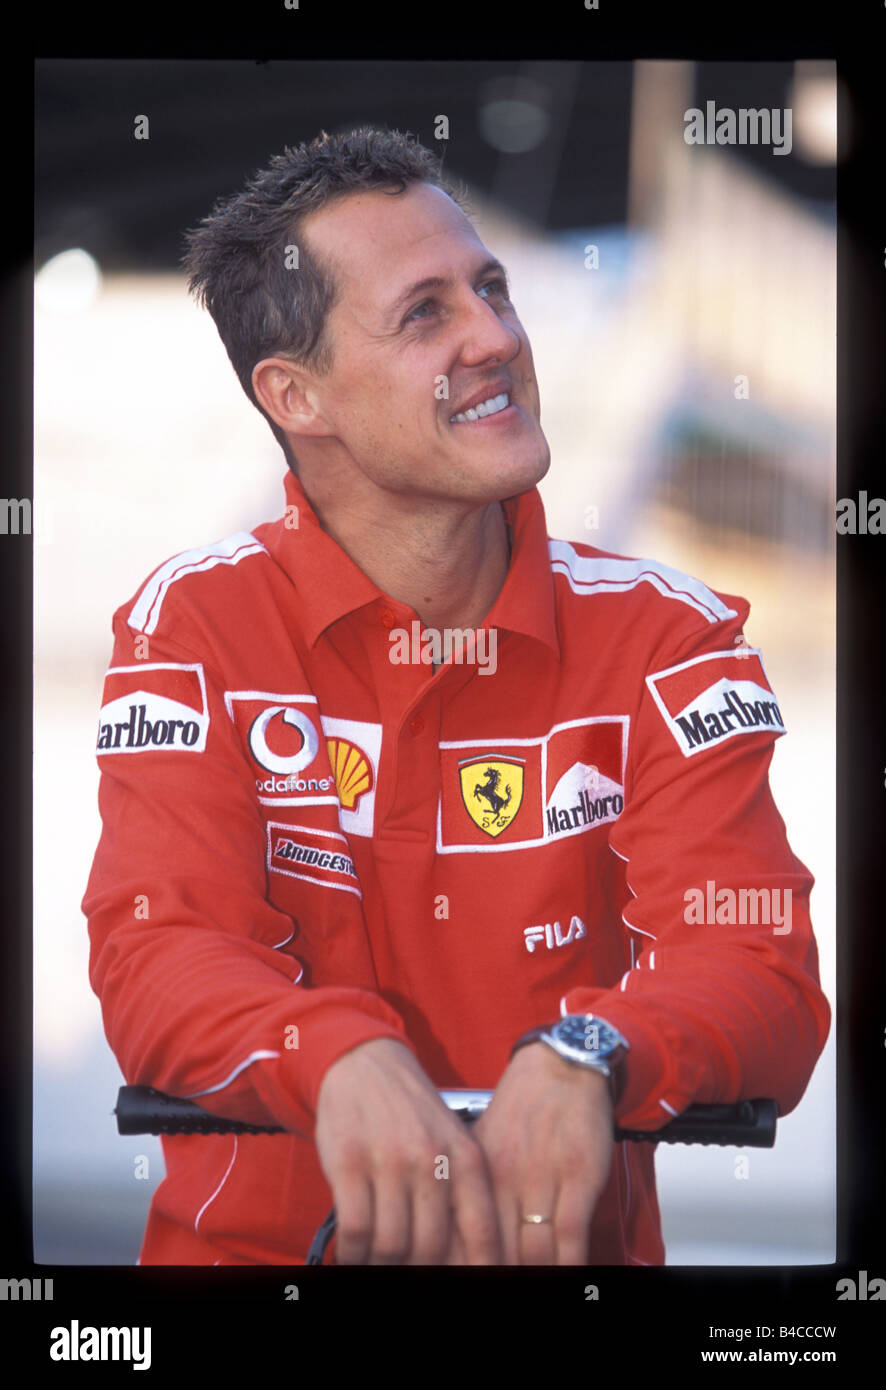 engine sport, Michael Schumacher, Ferrari, Formel 1 2005, Race driver, Portrait, Bahrain, photographer: Daniel Reinhard Stock Photo